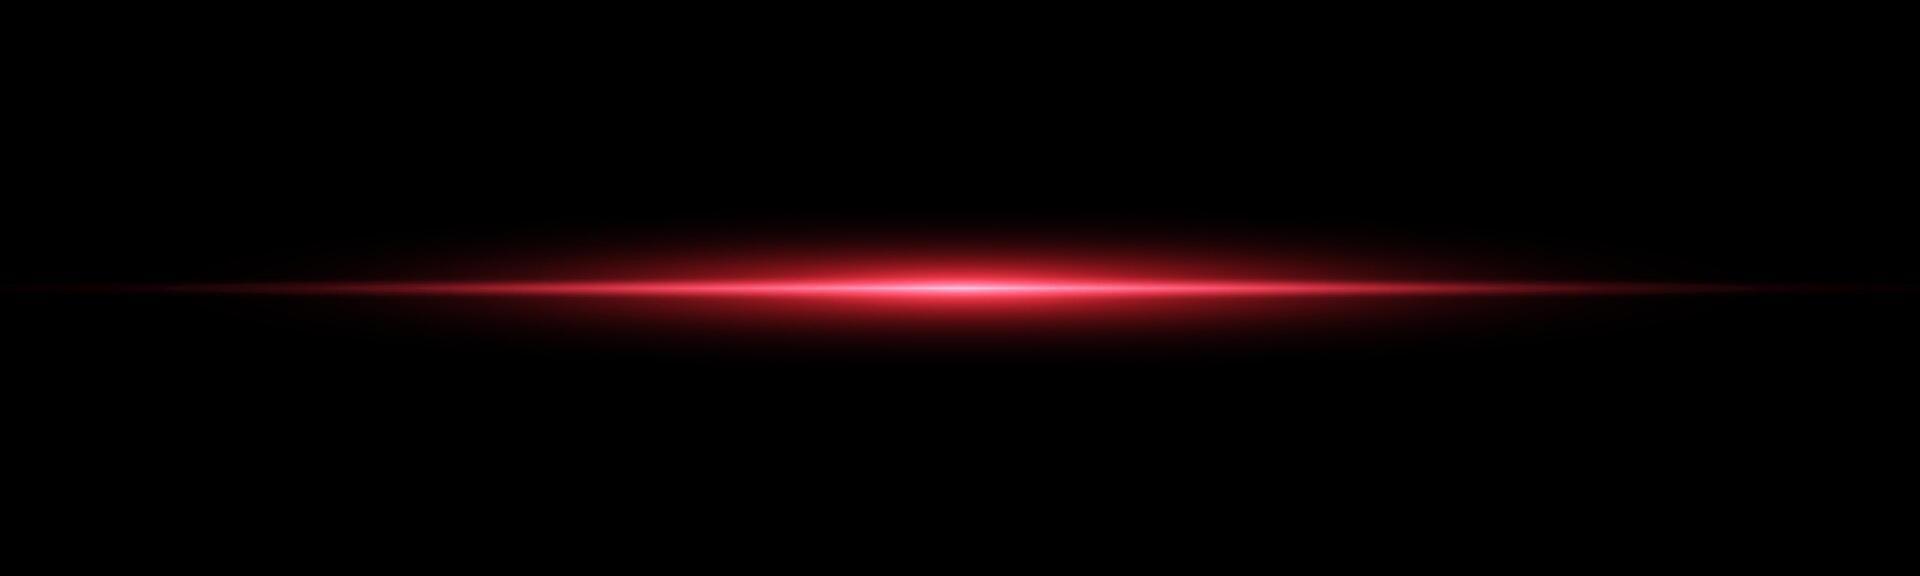 rood horizontaal laser straal. licht Lens flare. rood gloed gloed licht effect. illustratie. vector